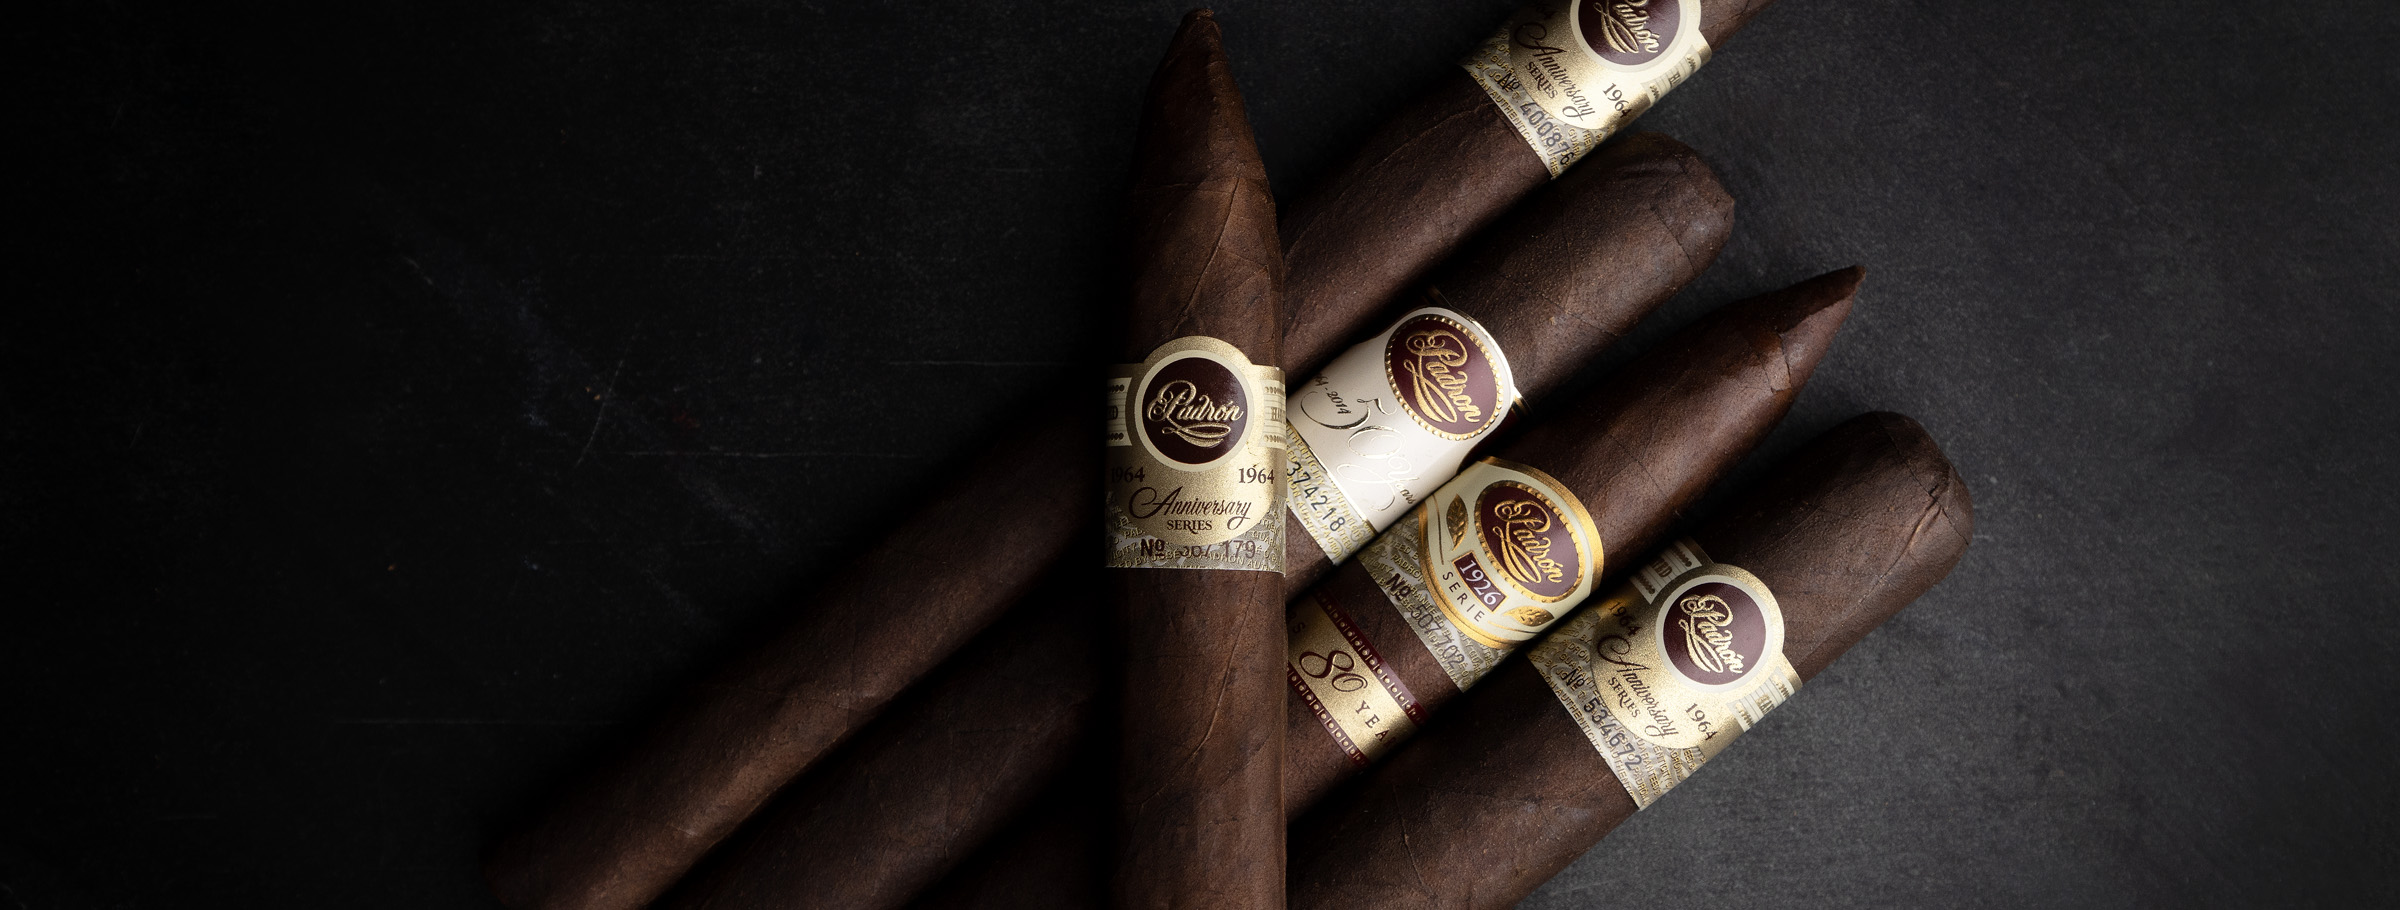 padron-1964-anniversary-series-aniversario-cigars-nicaragua